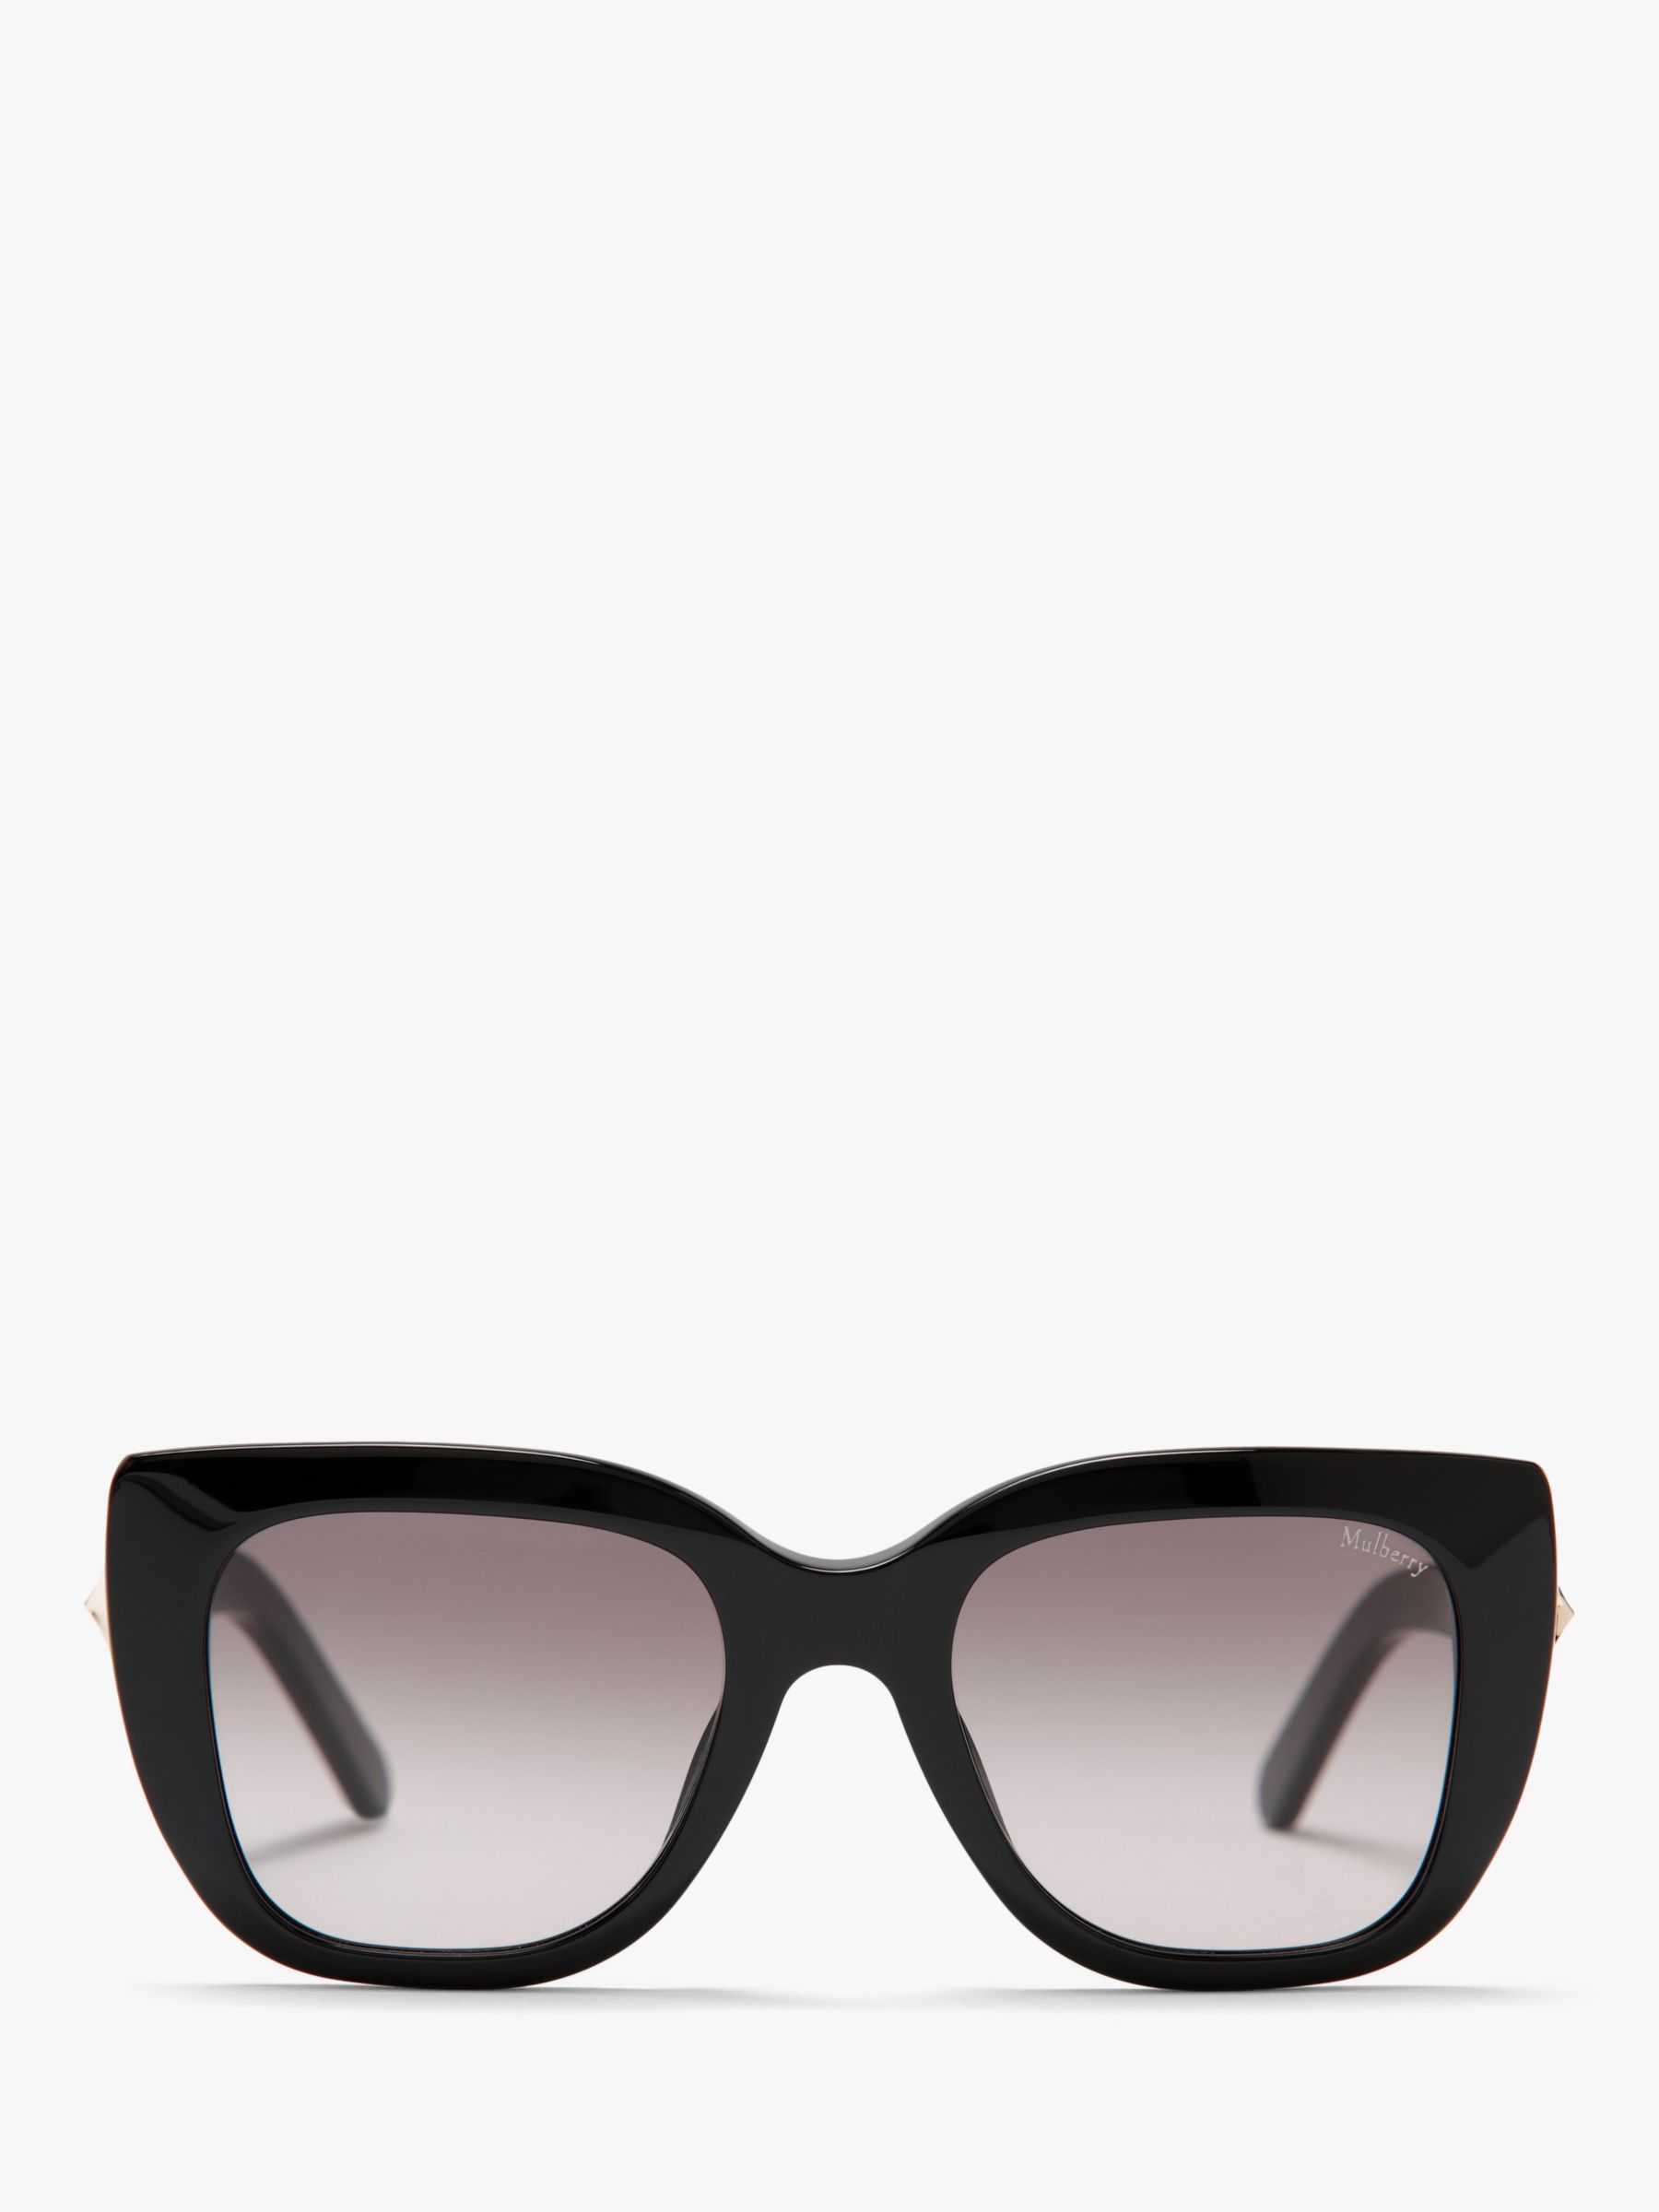 Mulberry Women's Keeley D-Frame Sunglasses, Black at John Lewis & Partners